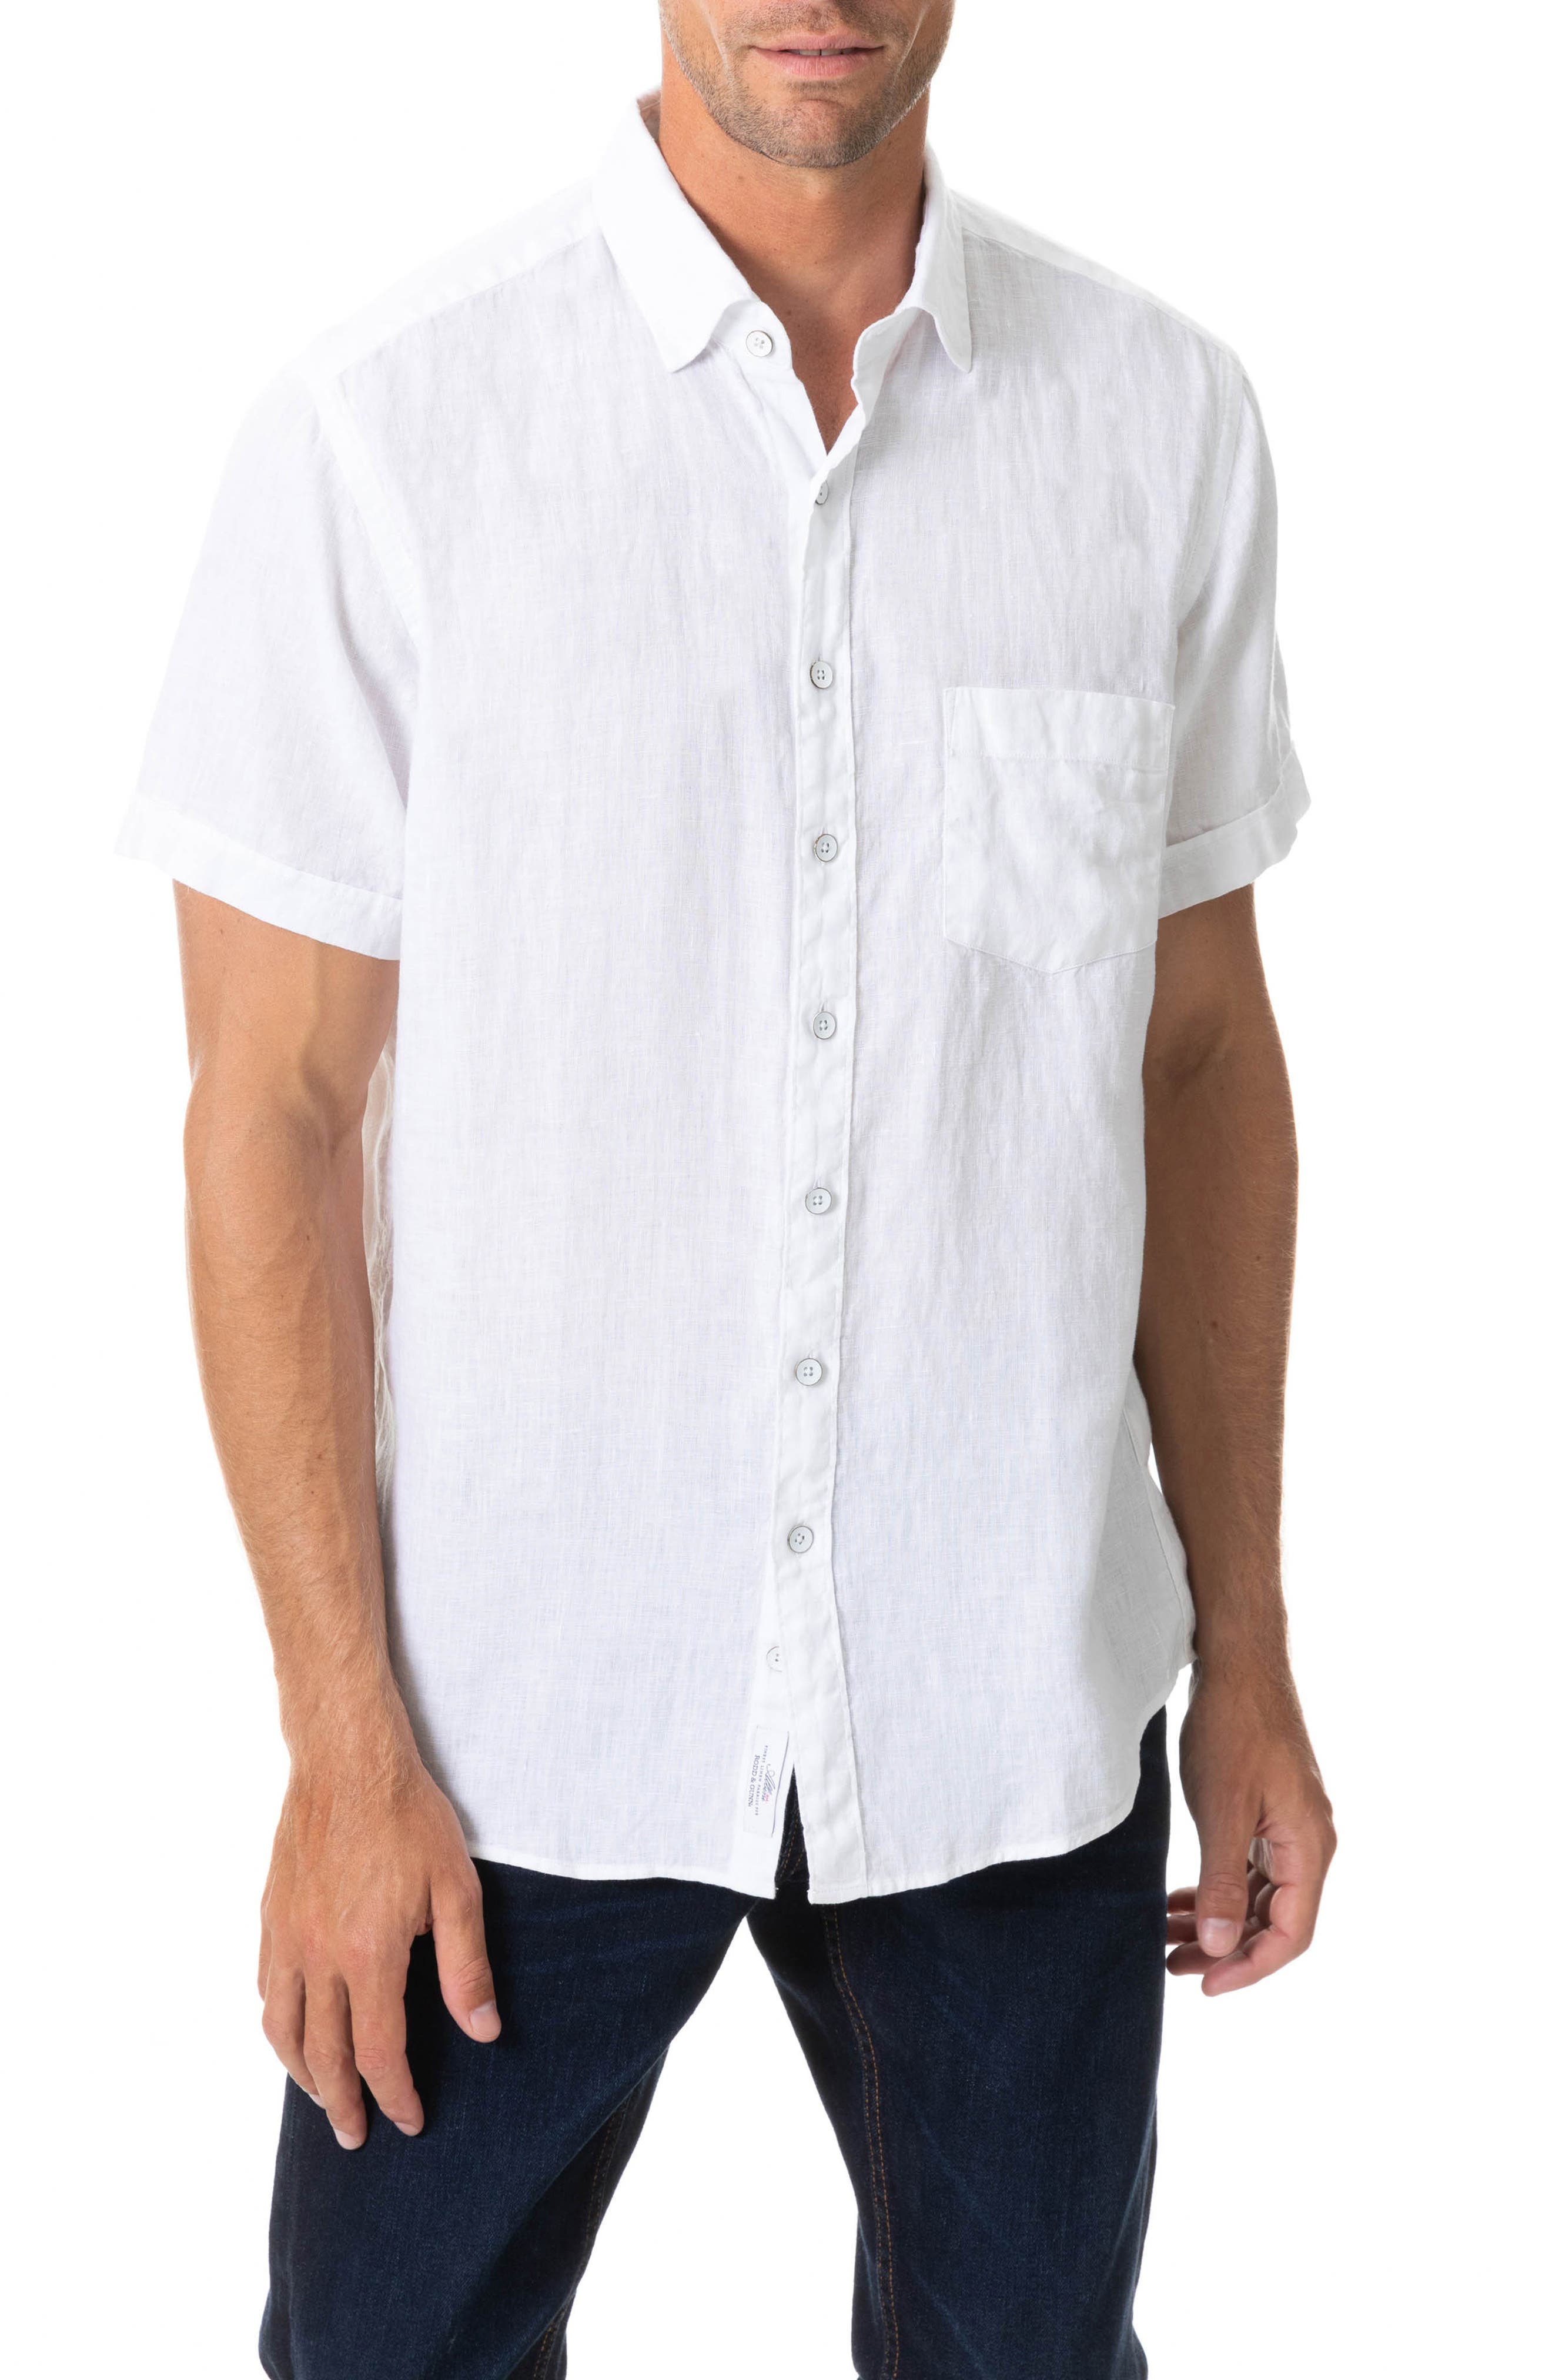 Peak performance Short Sleeve Shirt white business style Fashion Formal Shirts Short Sleeve Shirts 